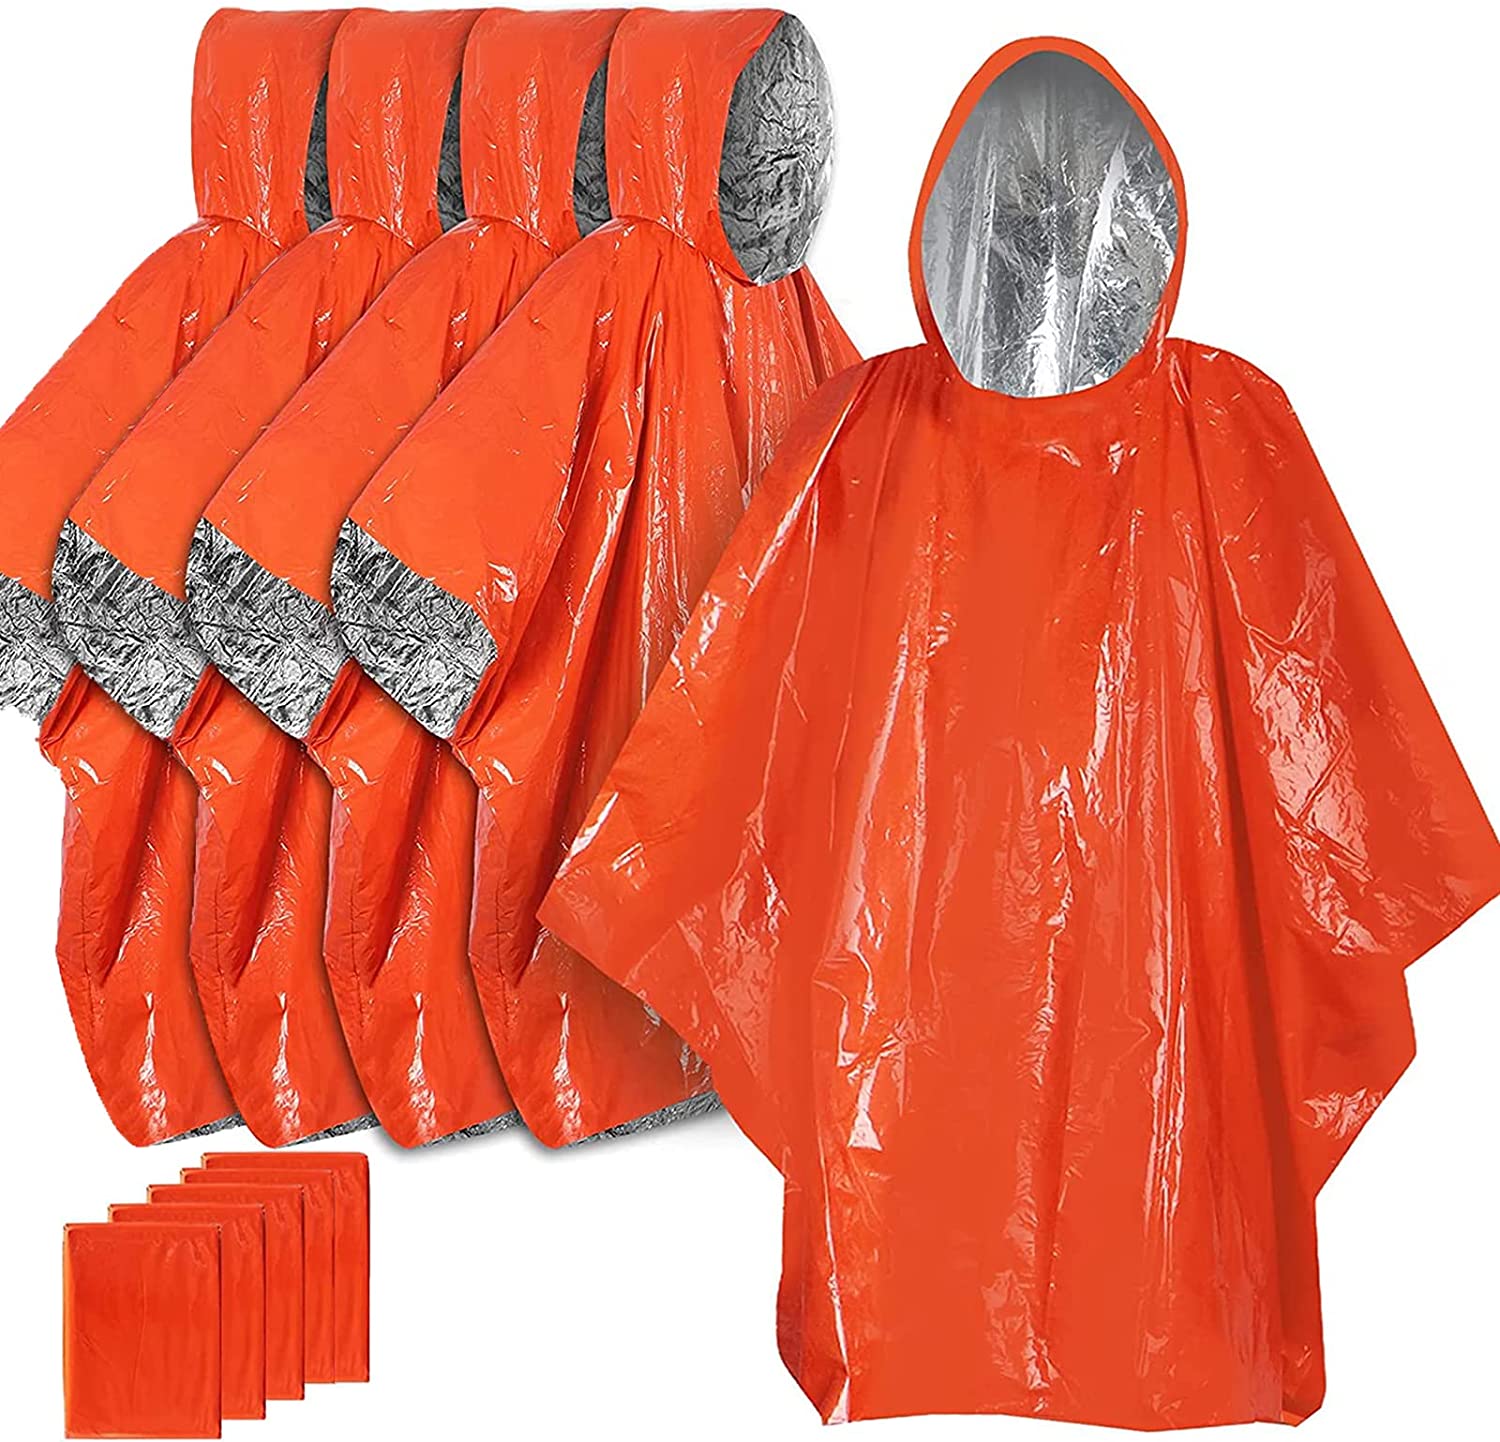 Premium Emergency Survival Life Poncho,5 Thermal Mylar Space Blanket Rain Ponchos -Waterproof Ultralight Use in Camping, Hiking, Survival Gear & Bug Out Bag (Orange) (orange-platinum Edition)